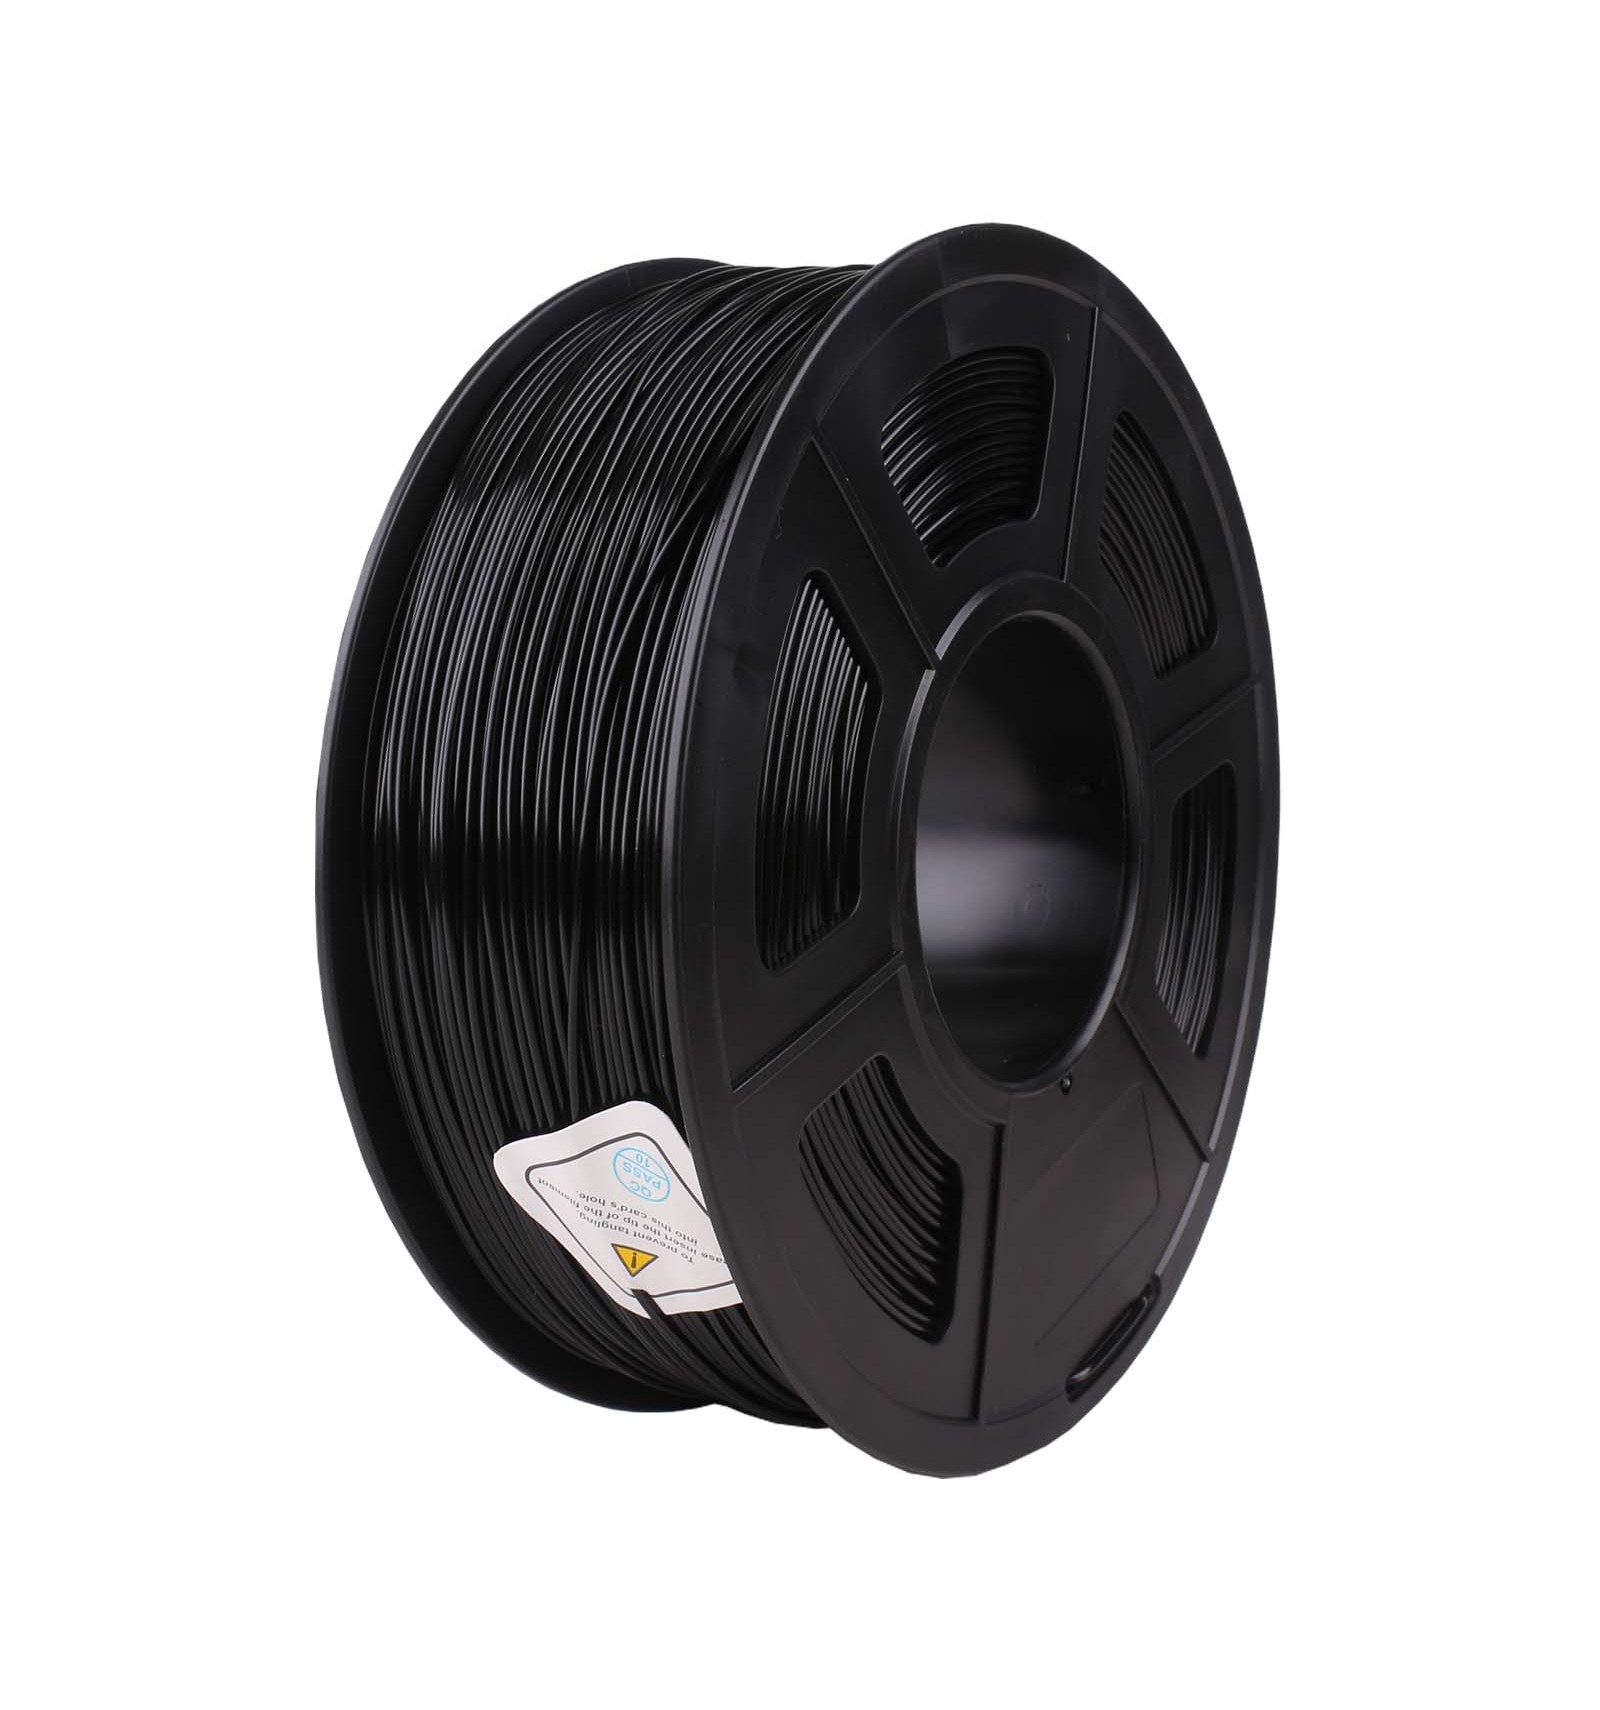 SunLu ABS Filament  1.75mm, Black, 1kg